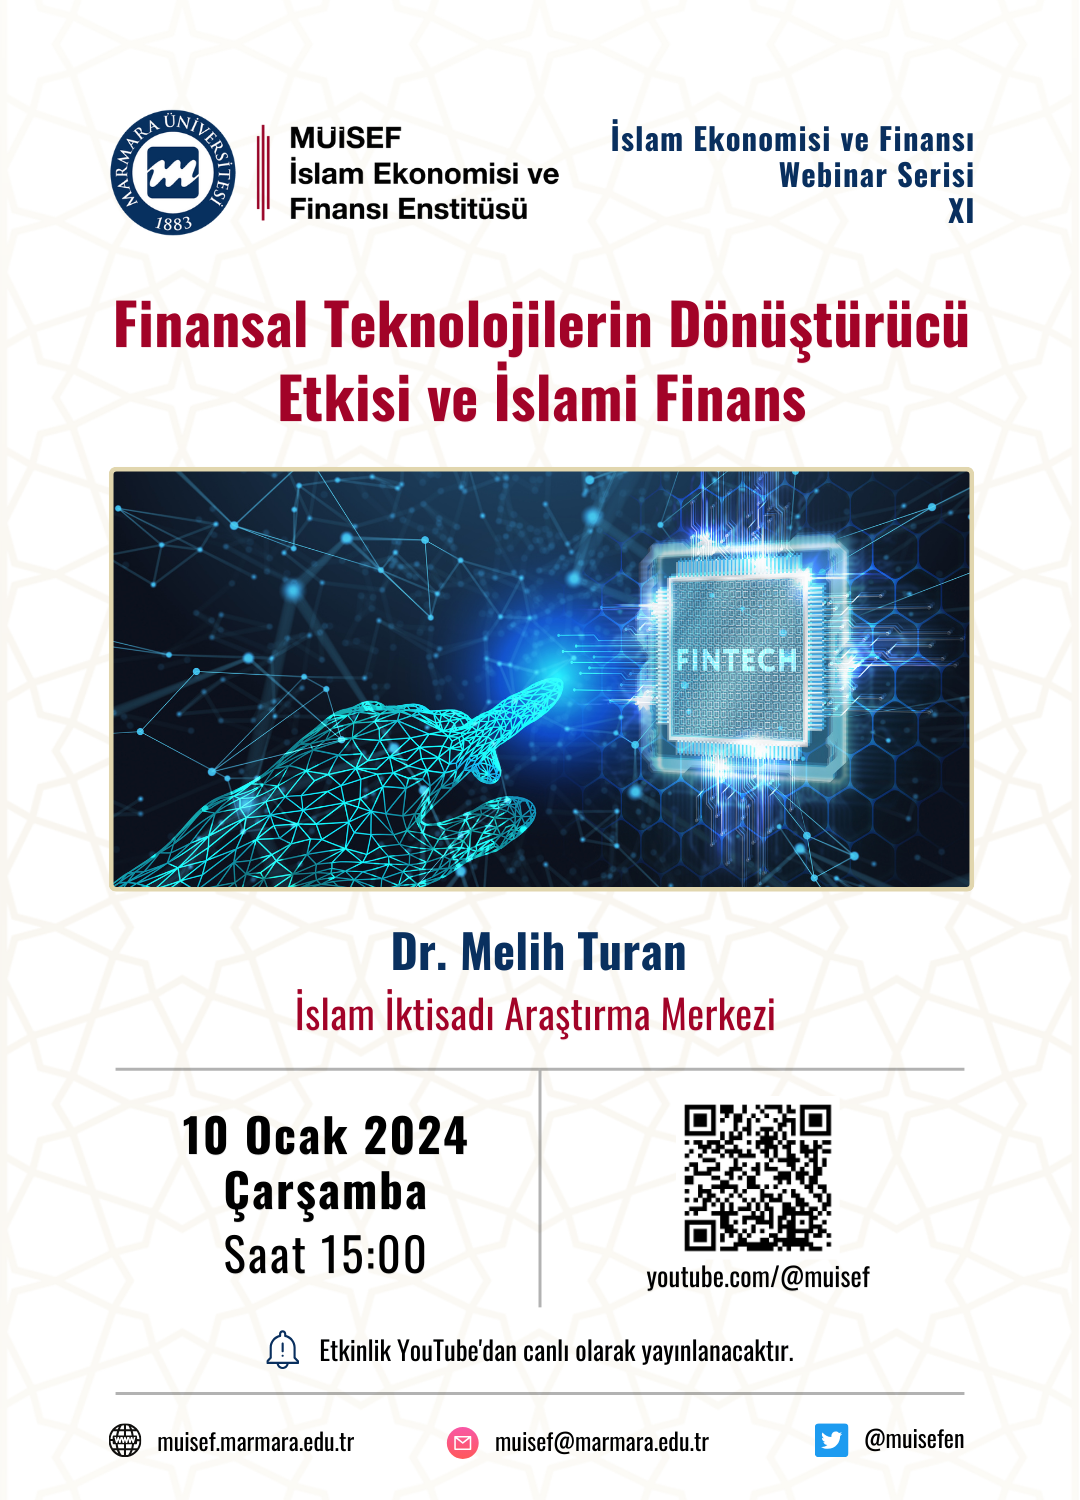 İslam Ekonomisi ve Finansı Konferans Serisi-11.png (1.07 MB)